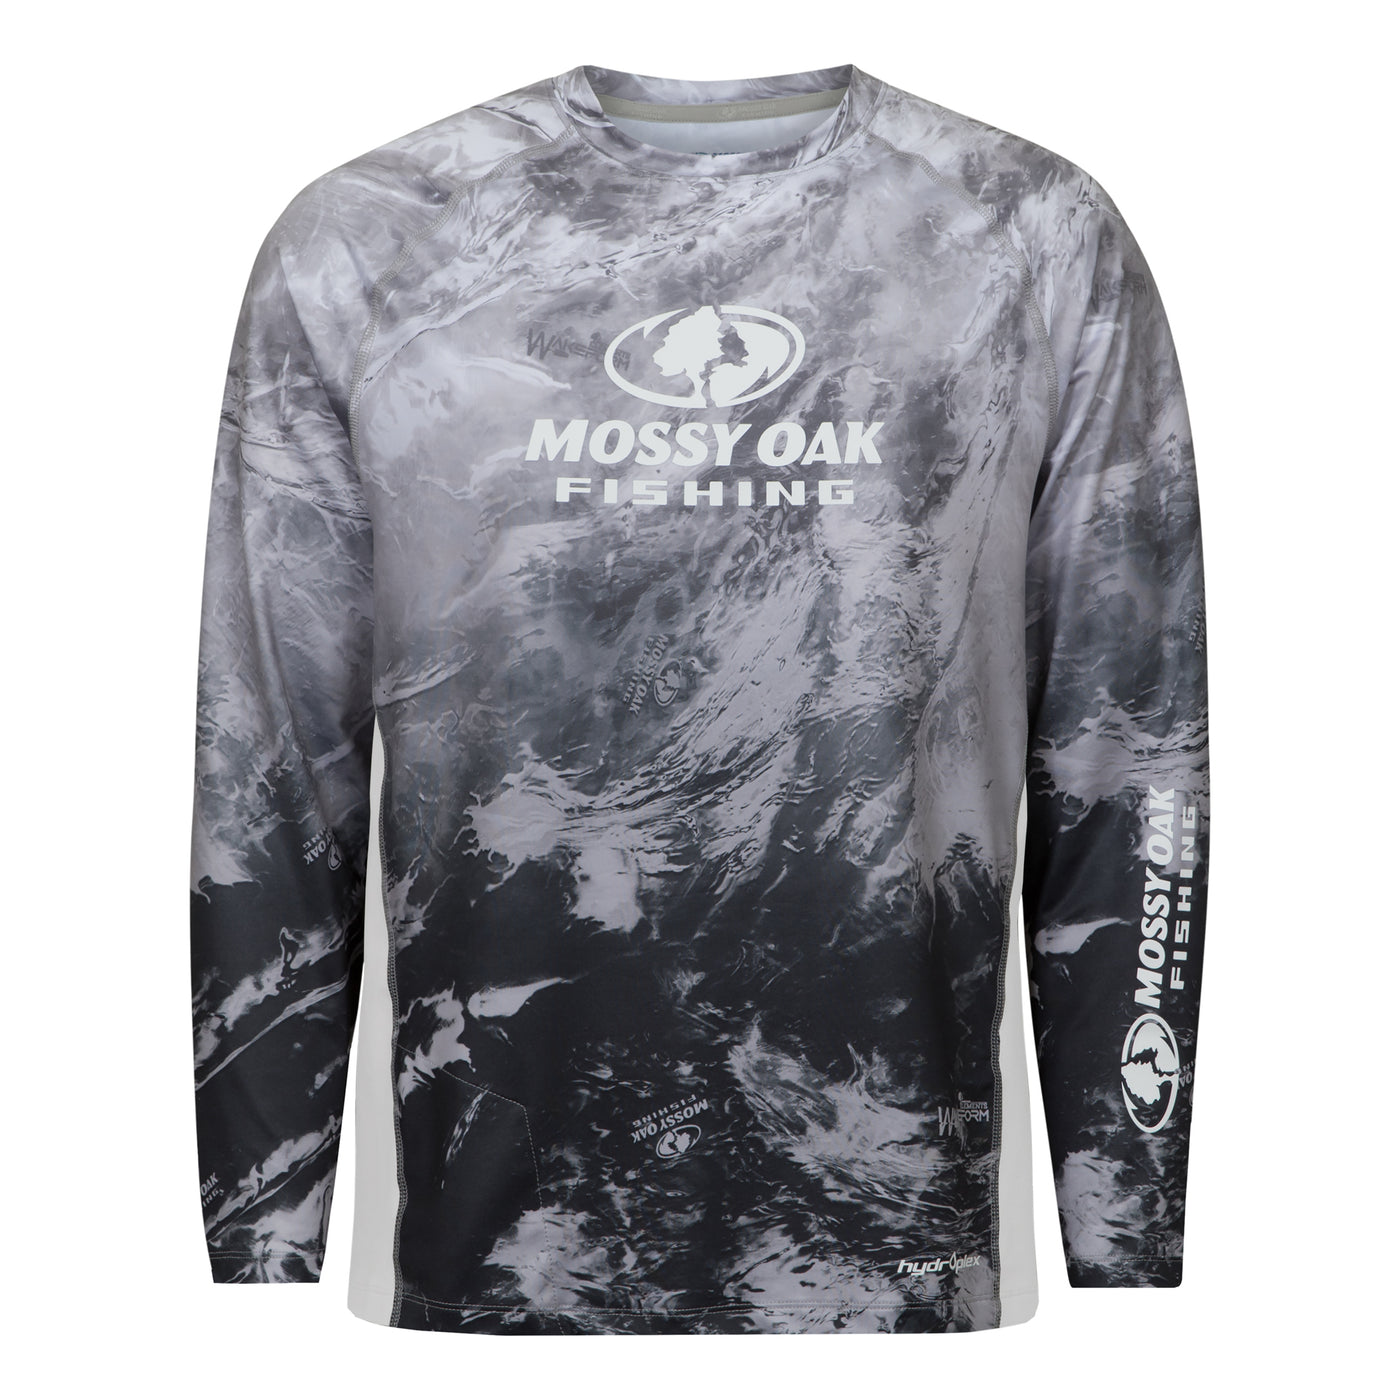 Mossy Oak Ombre Fishing Shirt Hailston Grey Ice